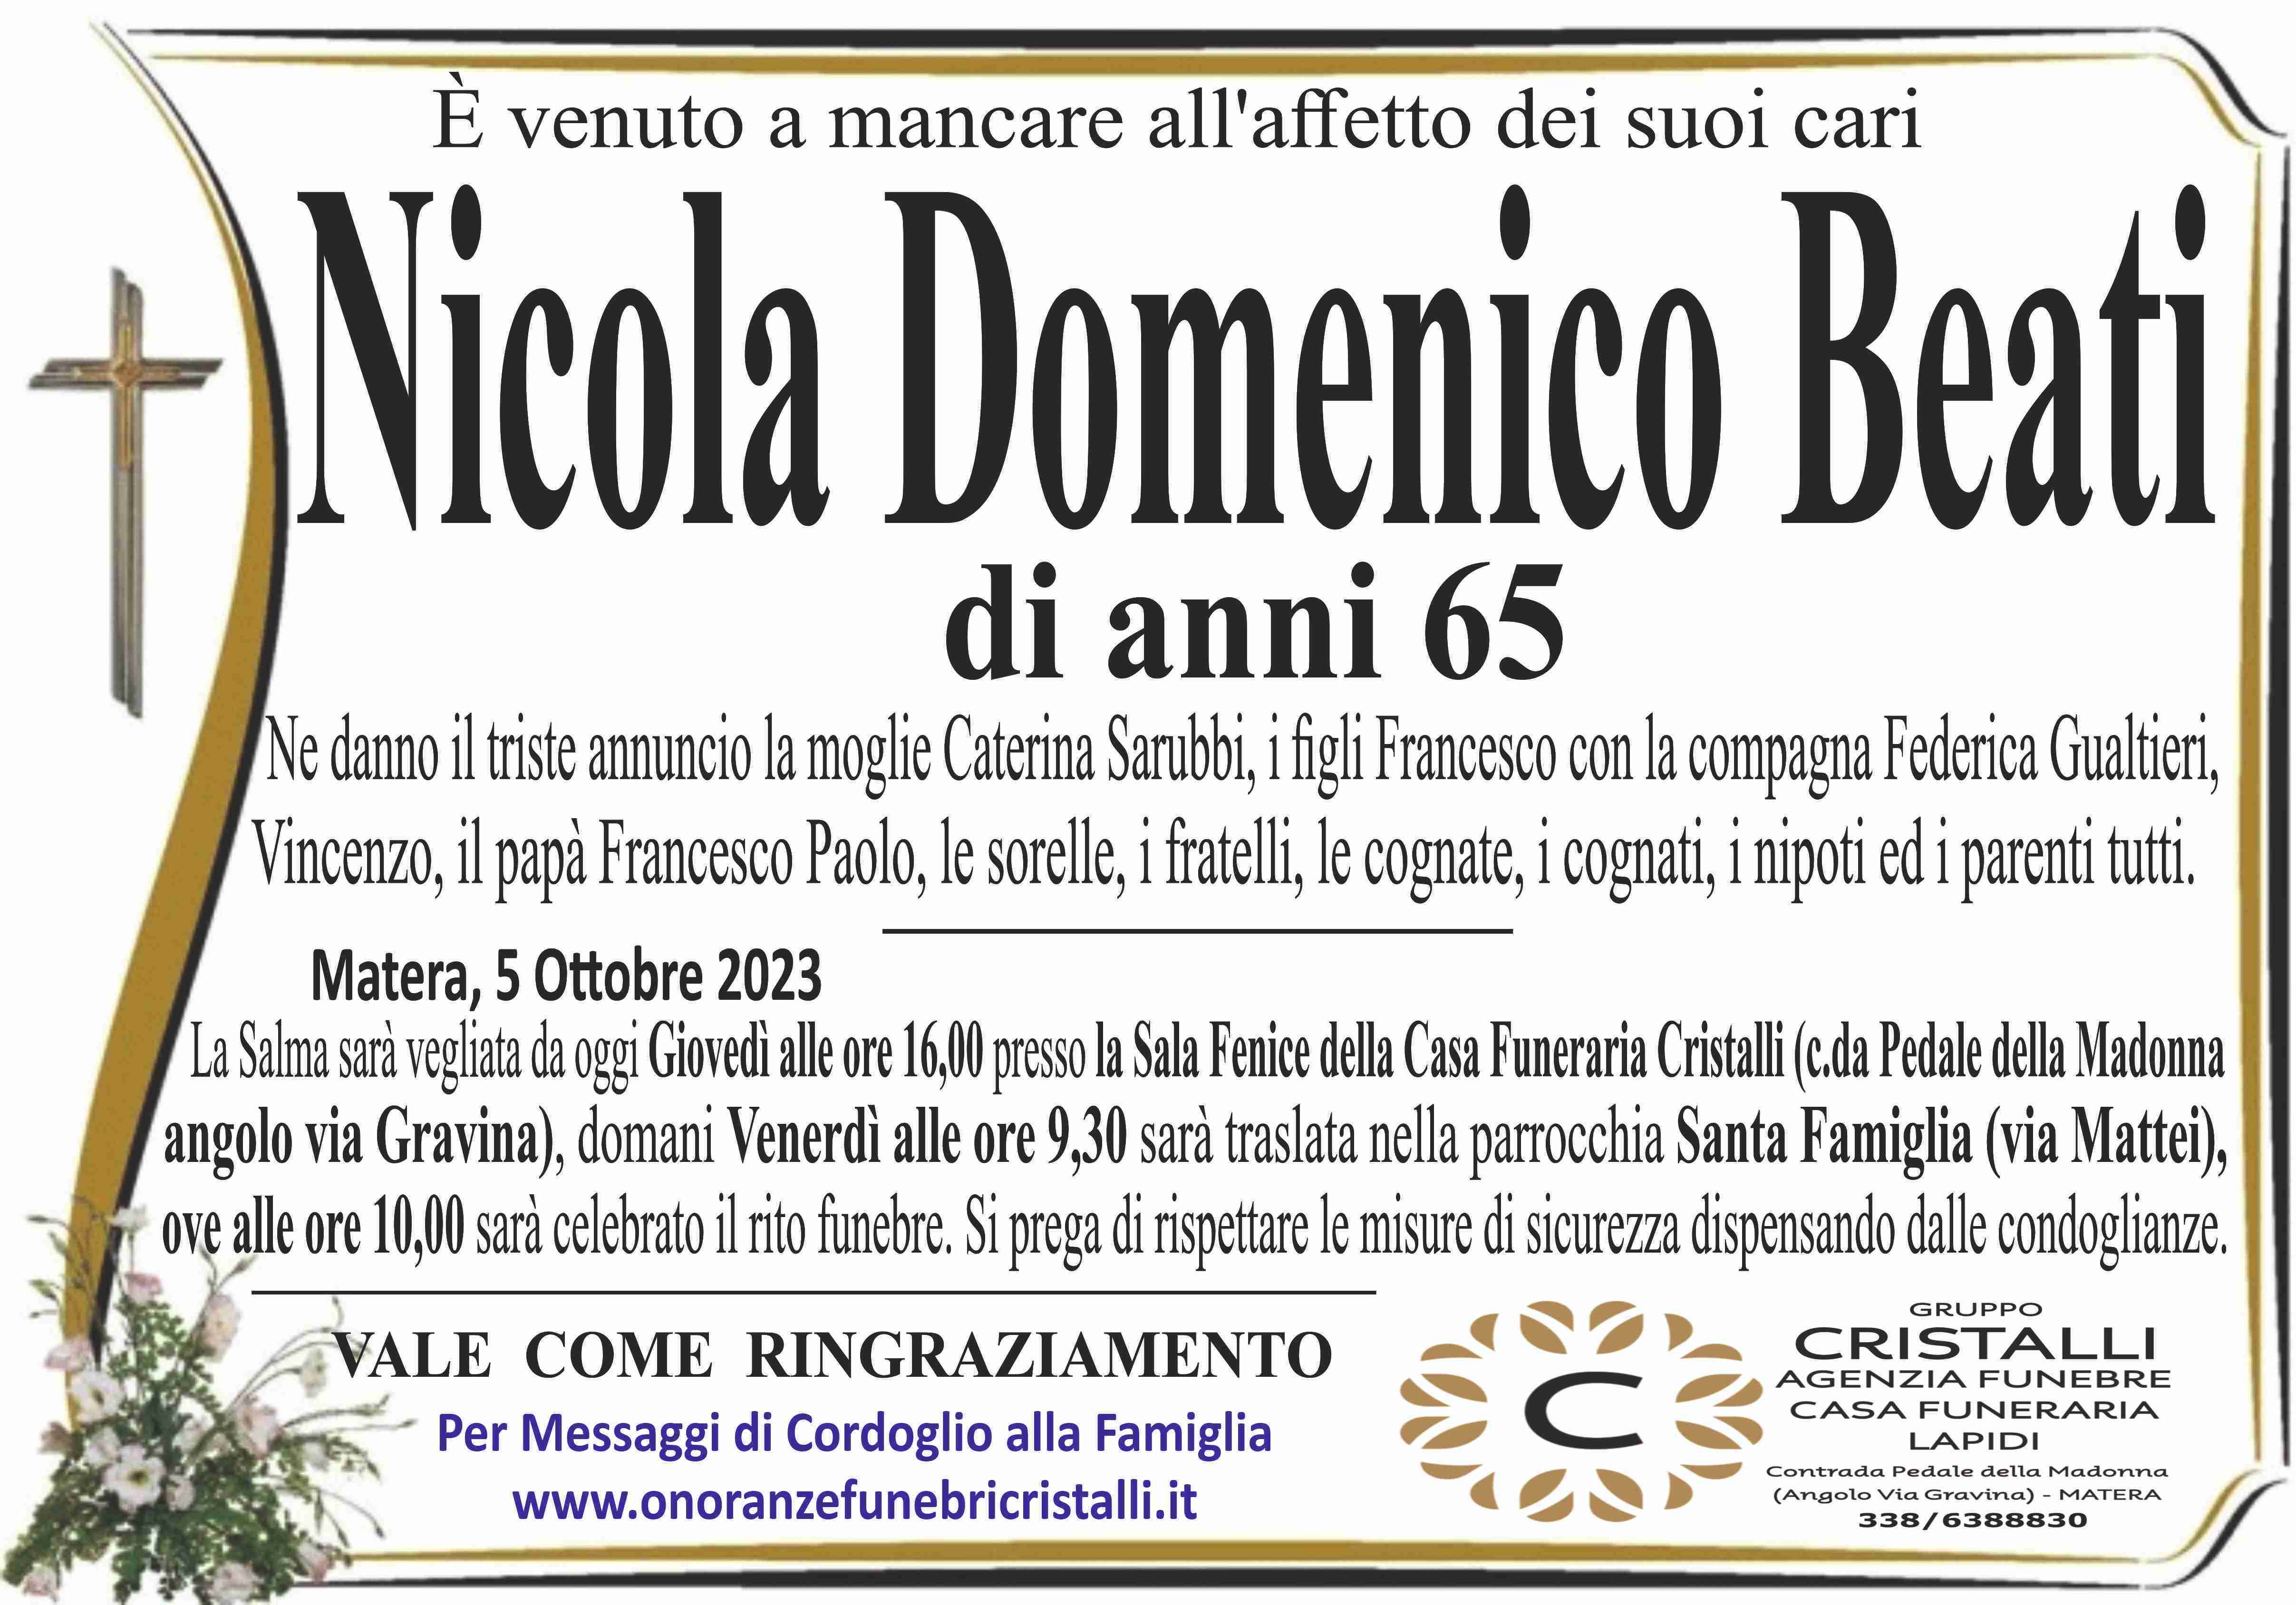 Nicola Domenico Beati